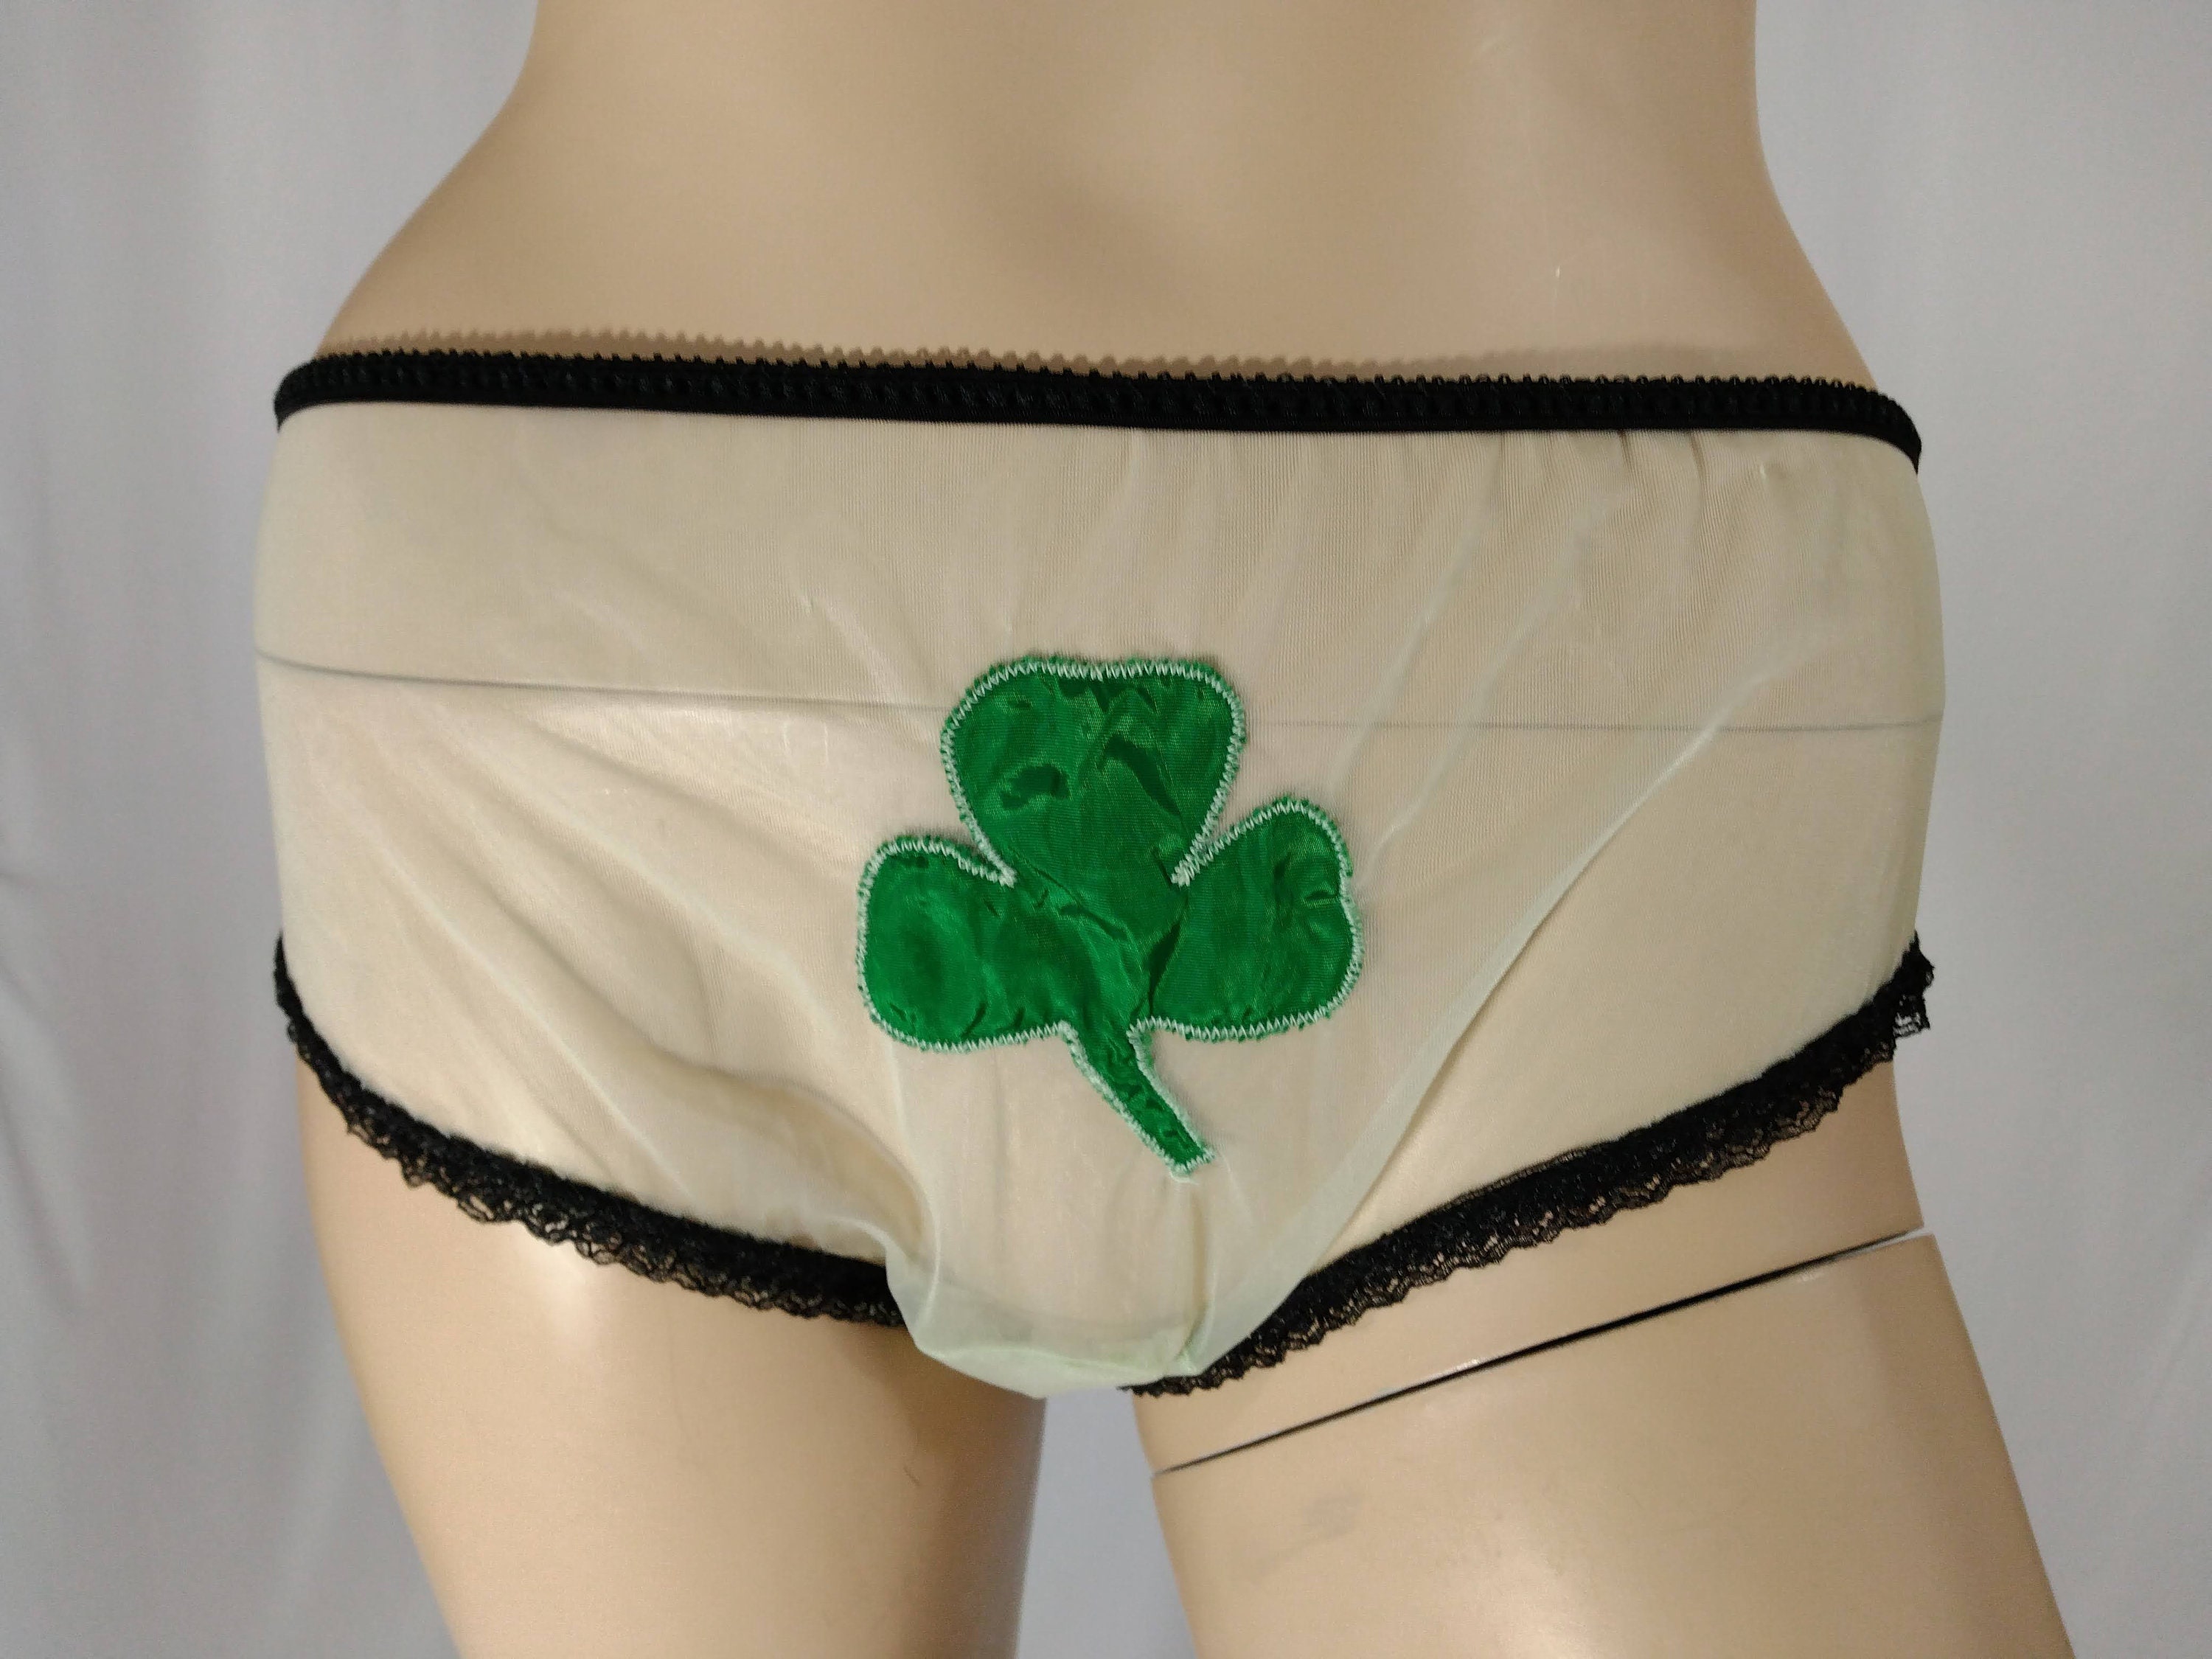 60's Lingerie Panties Women's Novelty St. Patrick's Day 3 Leaf